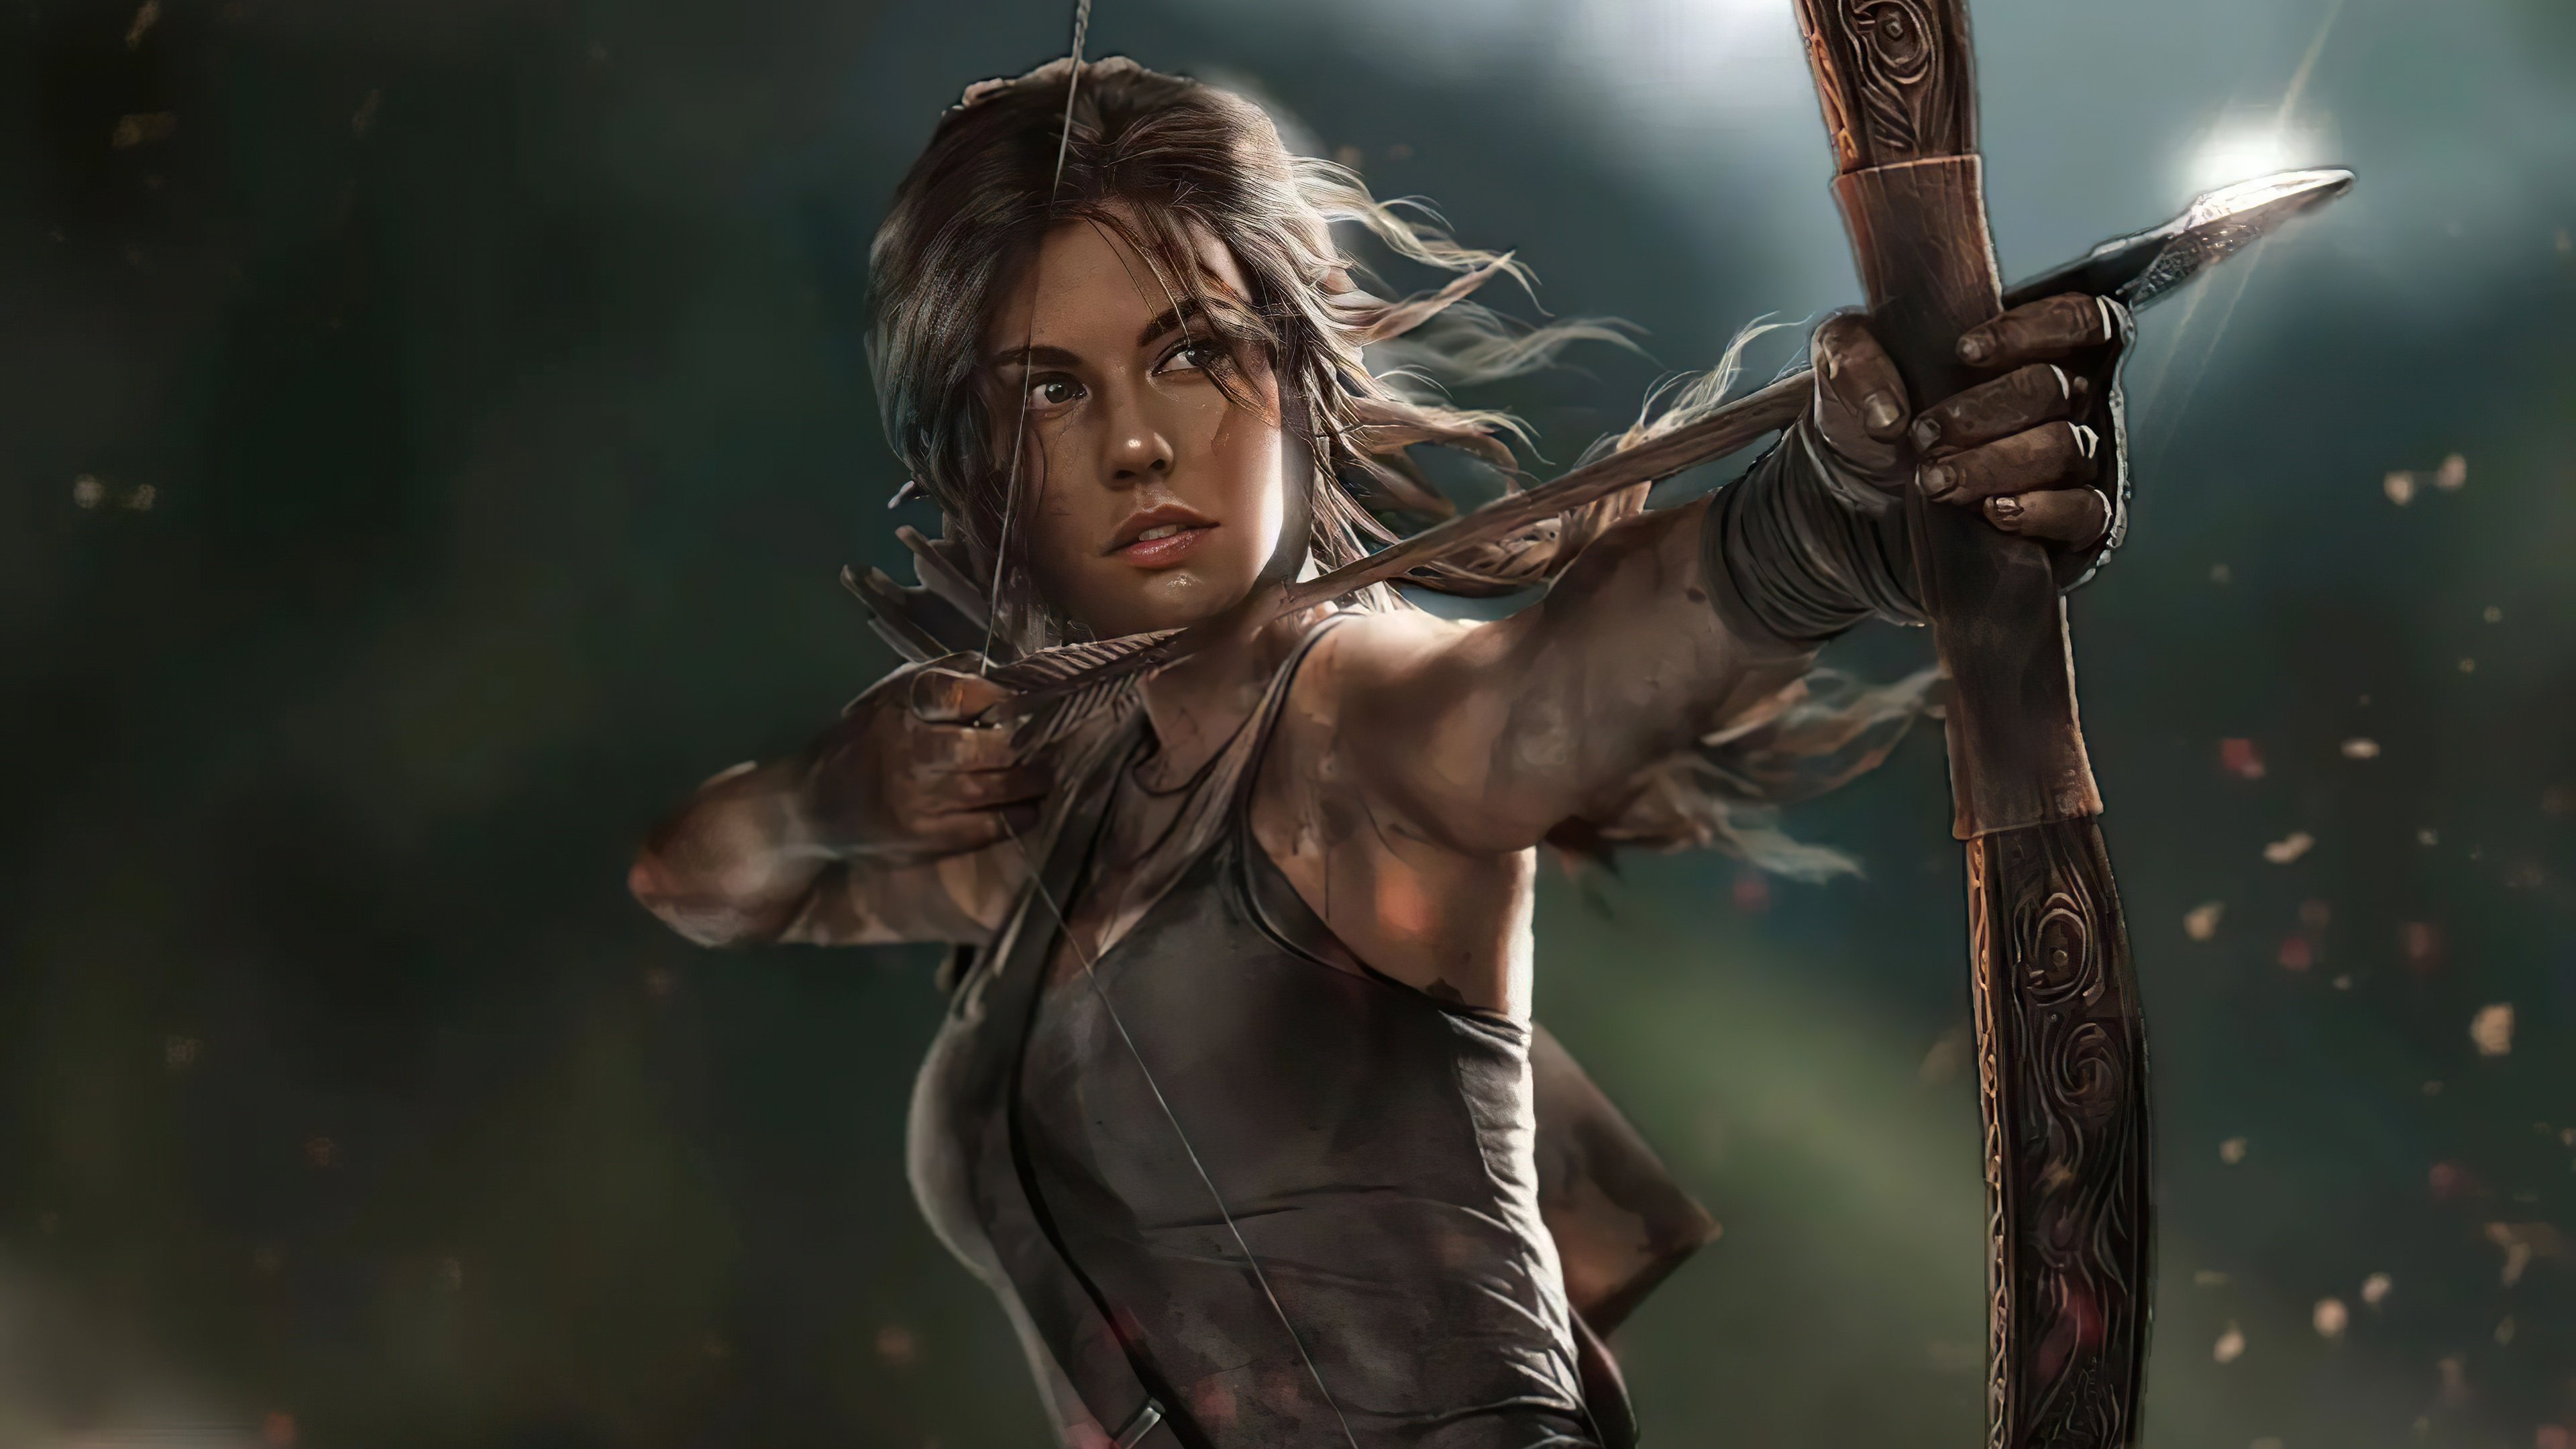 Wallpaper Lauren Cohan as Lara Croft The Tomb Raider